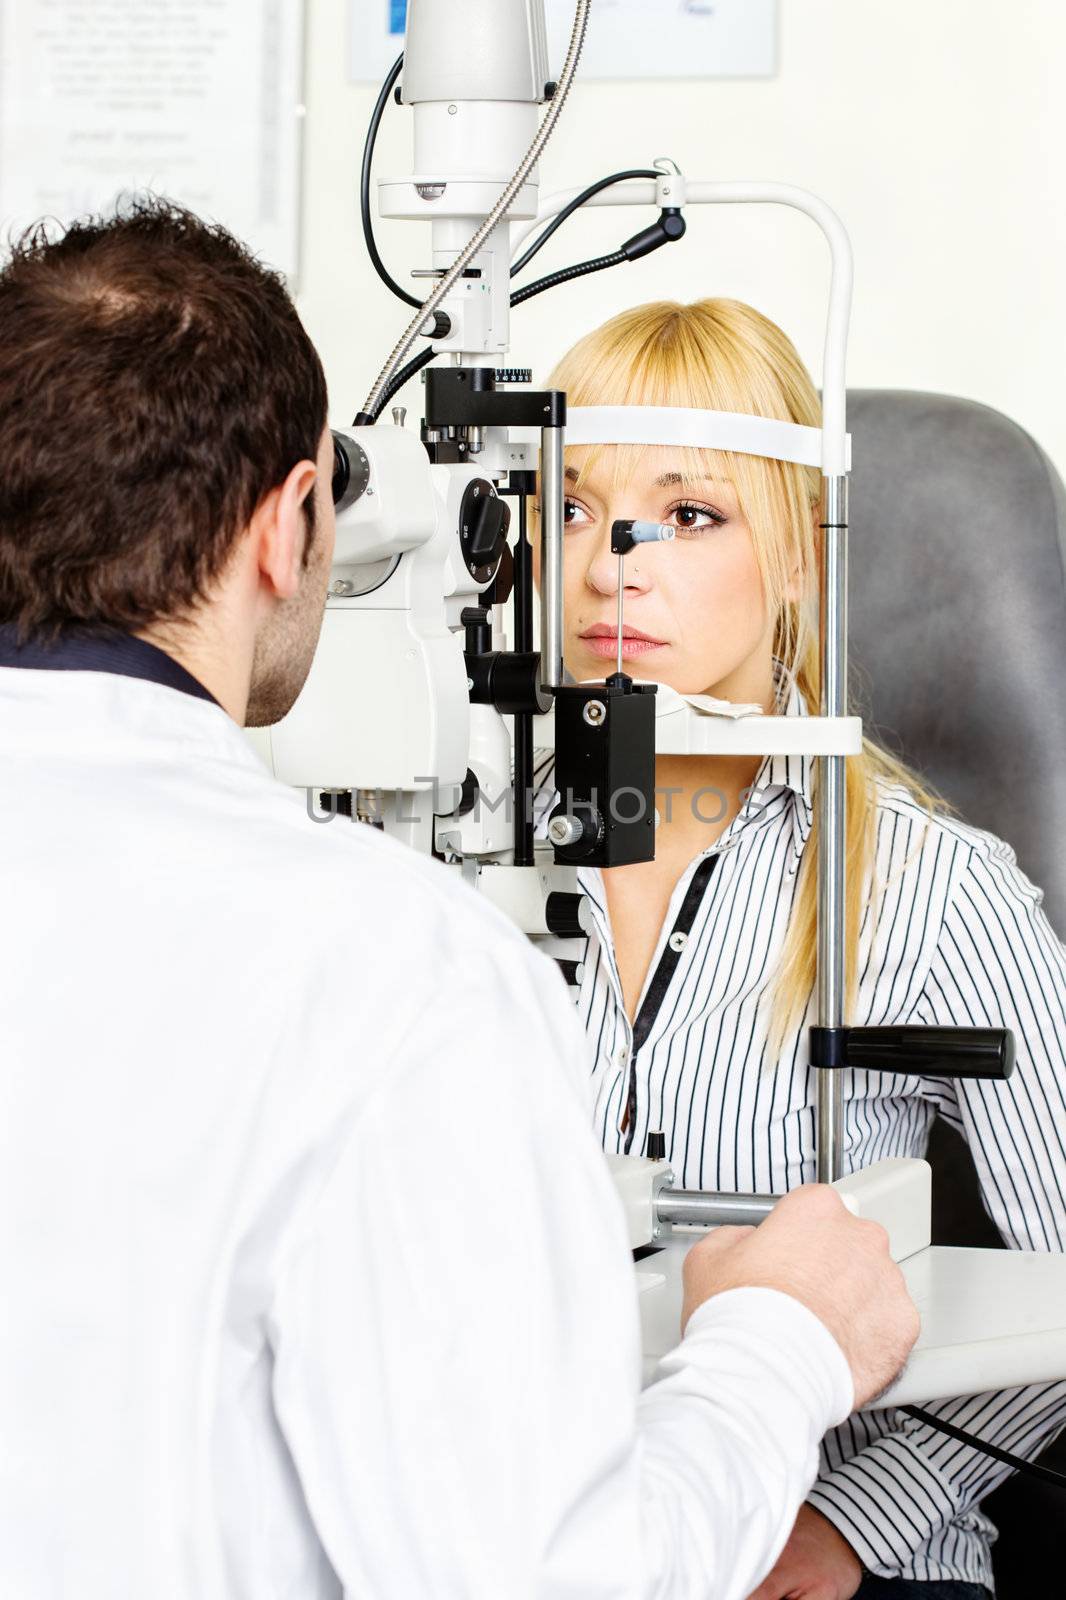 eye examination by imarin